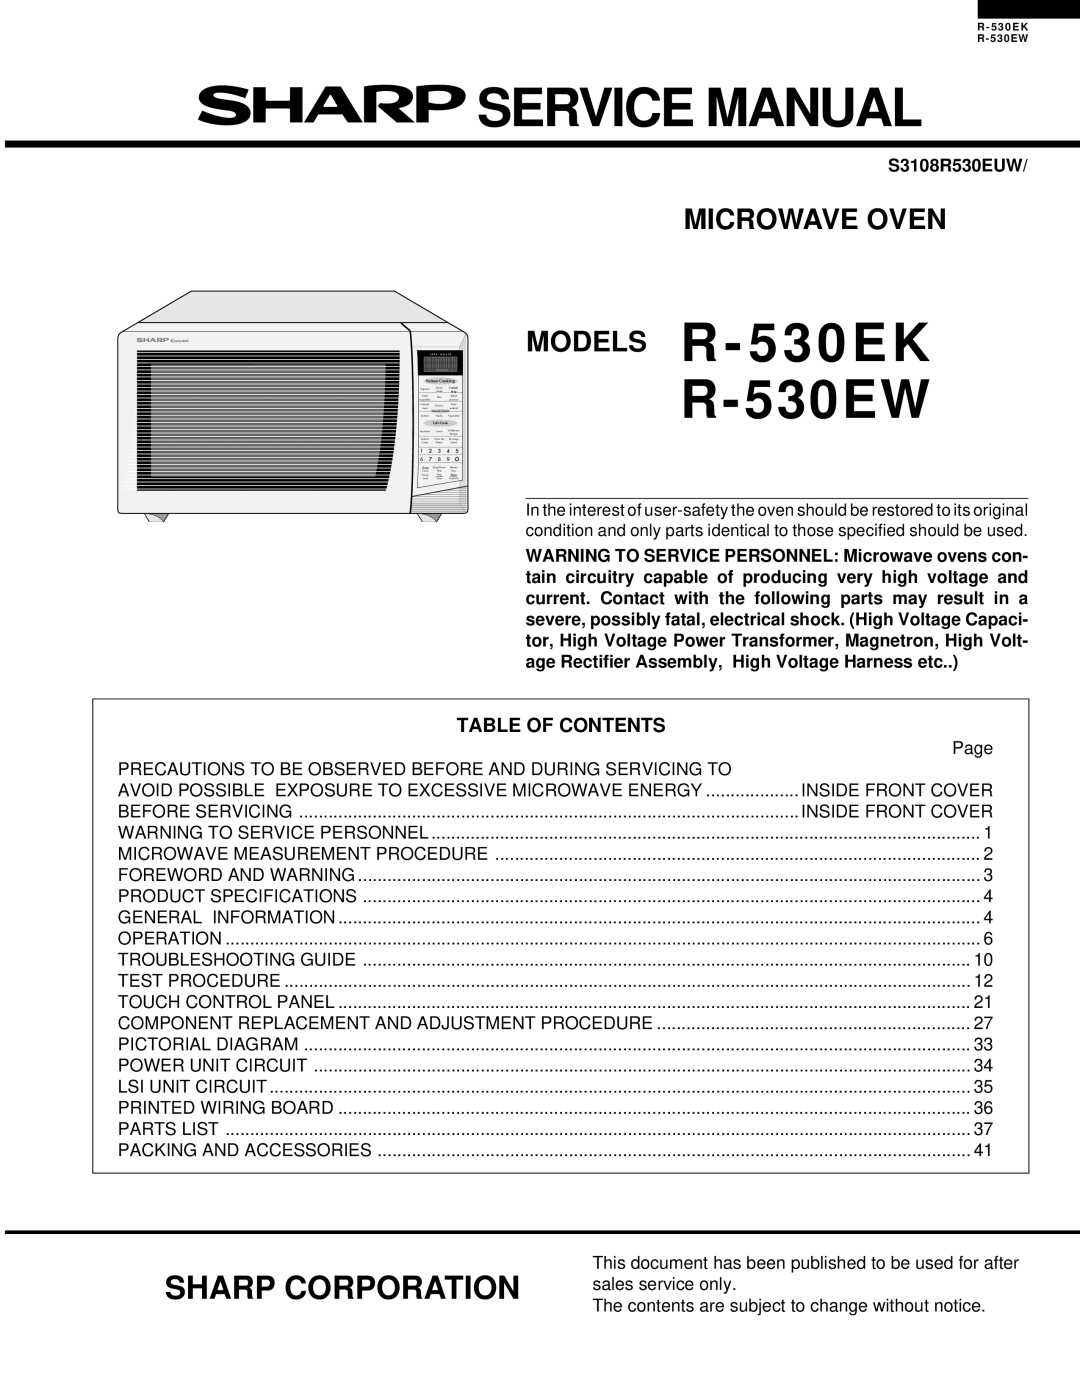 Sharp R-530EK service manual Sharp Corporation, Table Of Contents, MODELS R - 5 3 0 E K R-530EW, Microwave Oven 